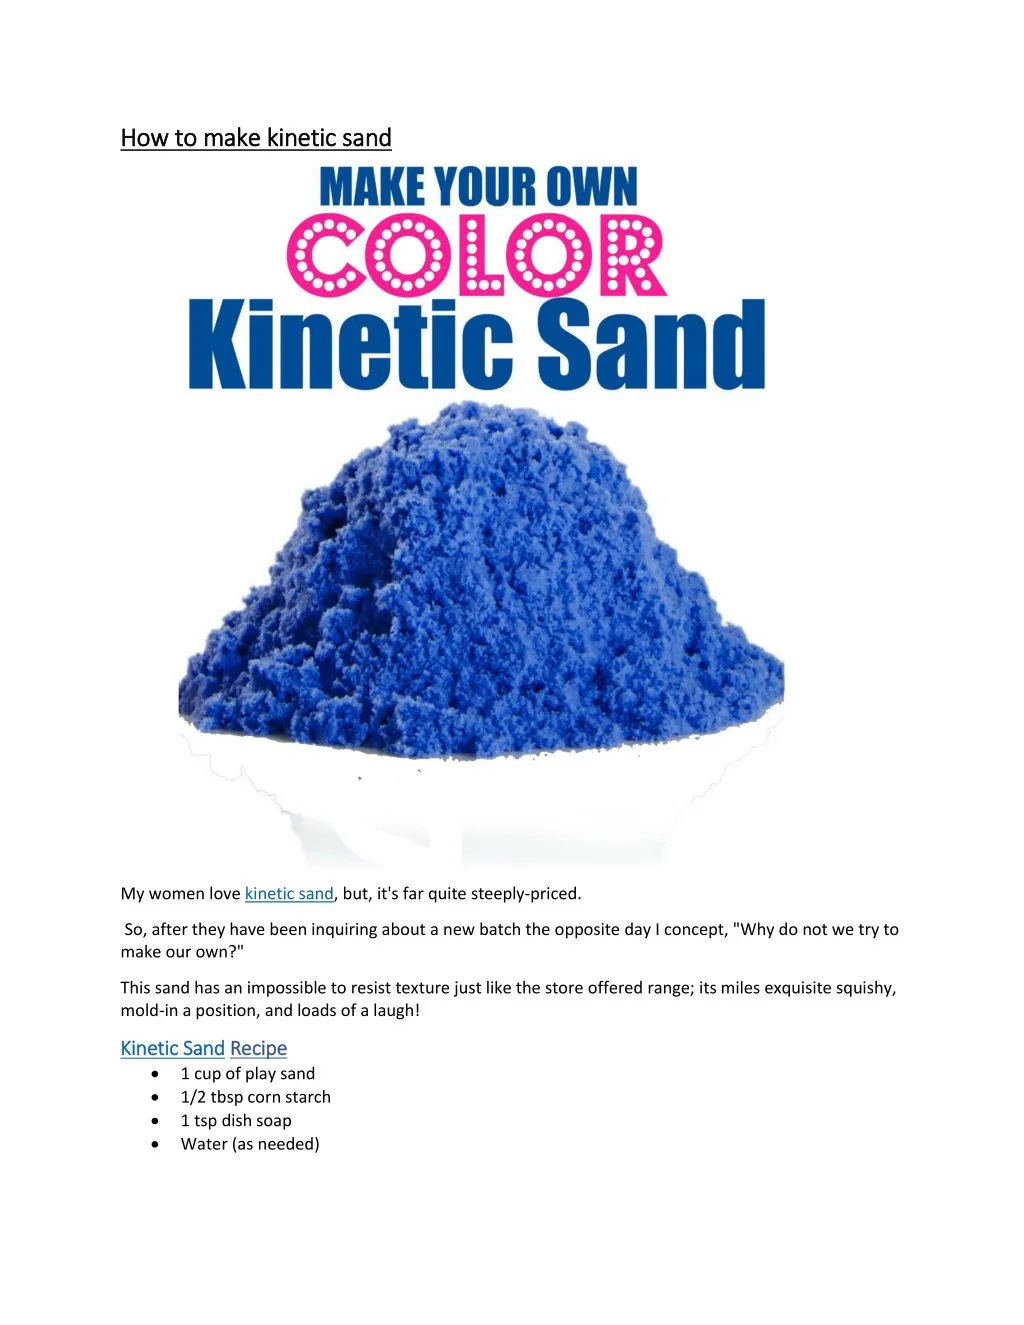 h how to make kinetic sand ow to make kinetic sand